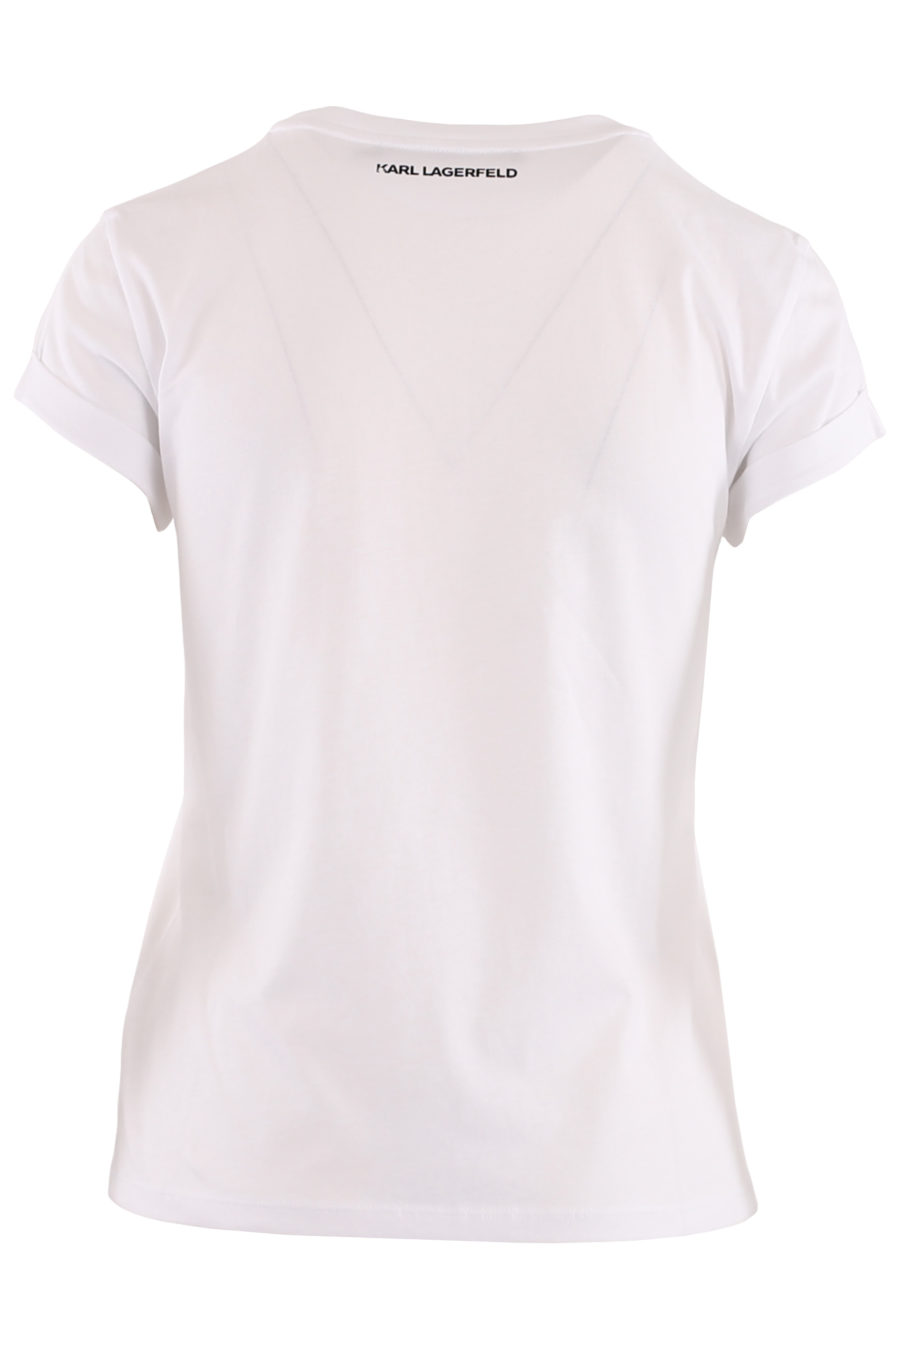 Camiseta blanca con bolsillo y logo - b23fe41385d4ae7ad58c85f6b5ad4943bc283560